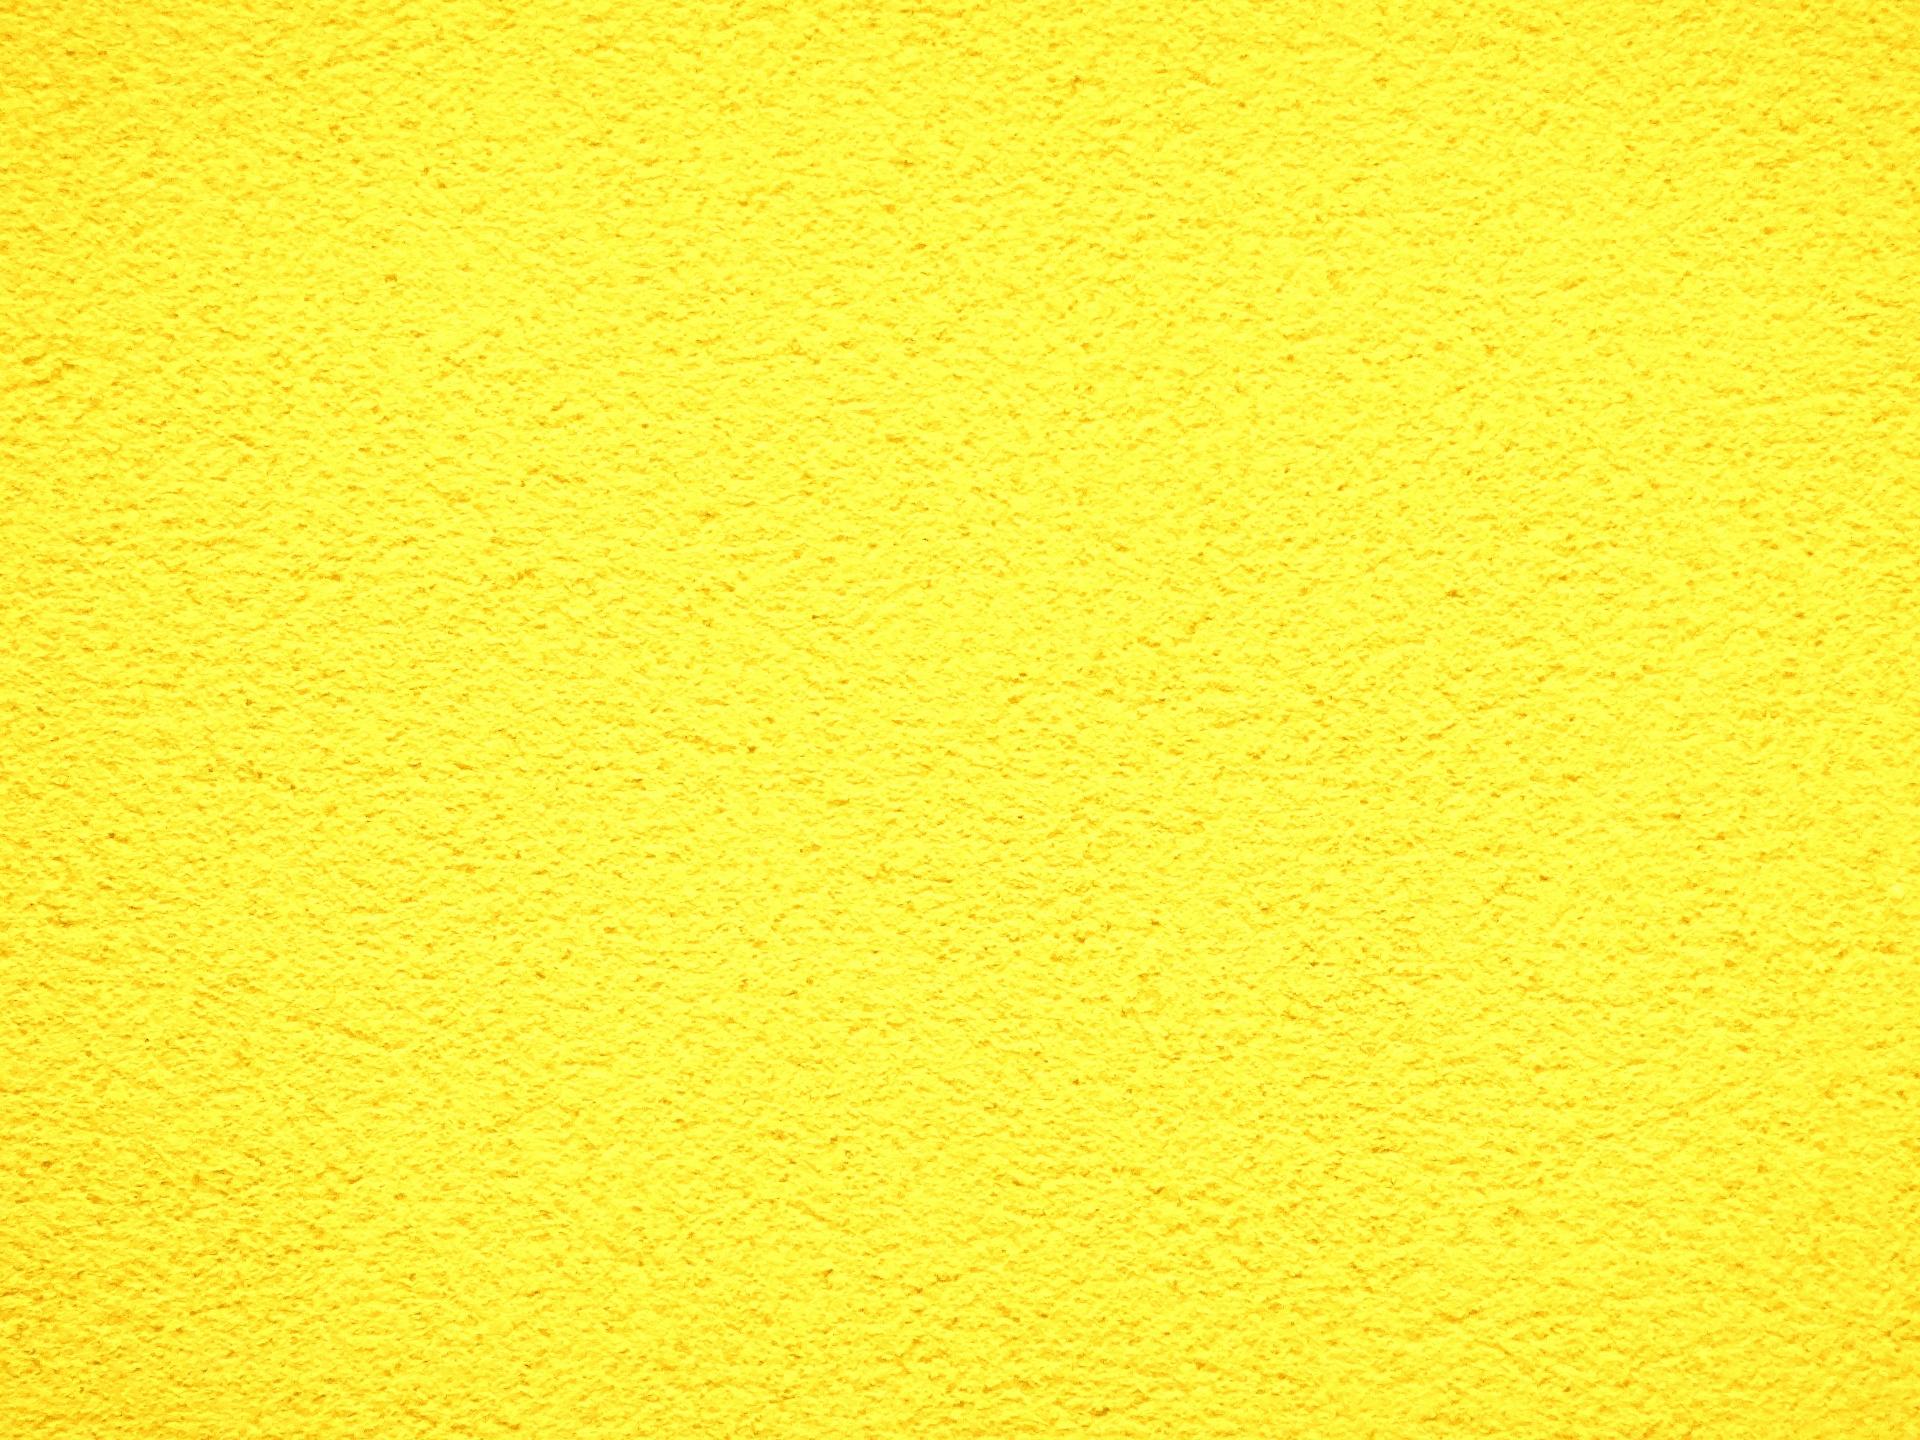 Wallpaper Fundo amarelo